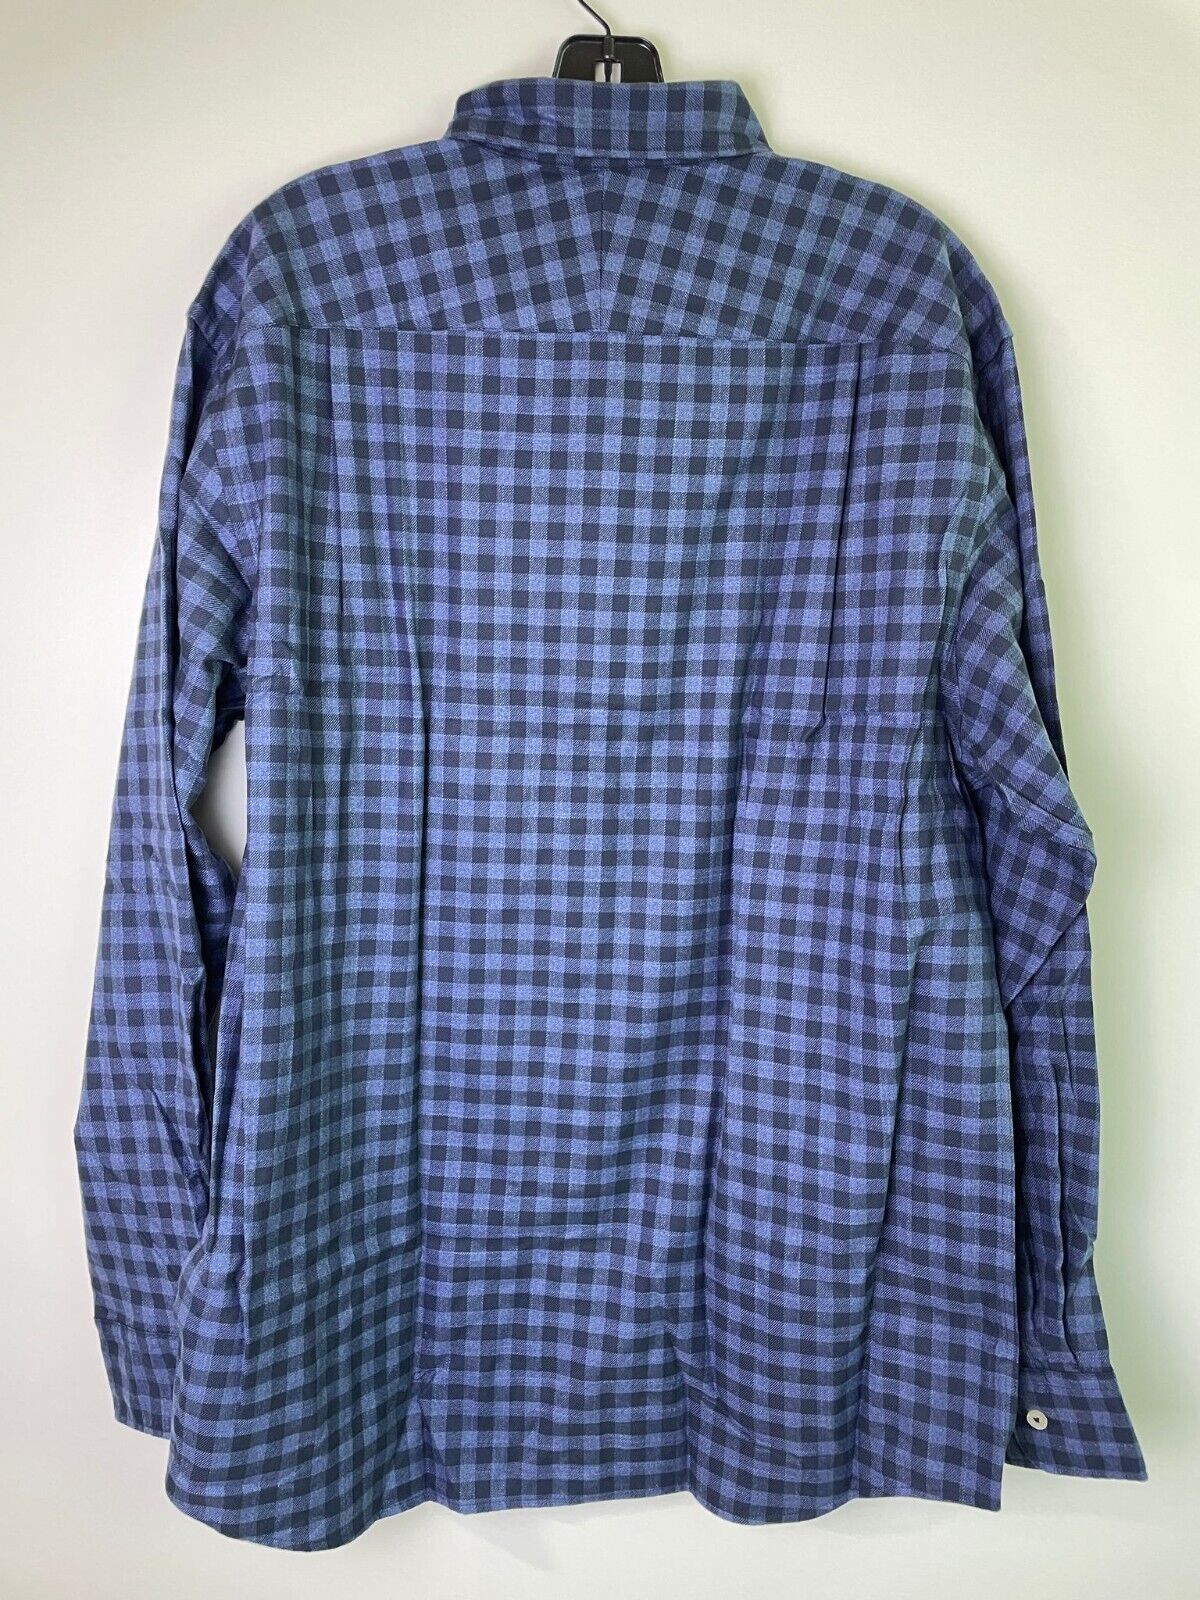 Charles Tyrwhitt Mens L Non-Iron Twill Gingham Plaid Shirt Indigo Classic Fit